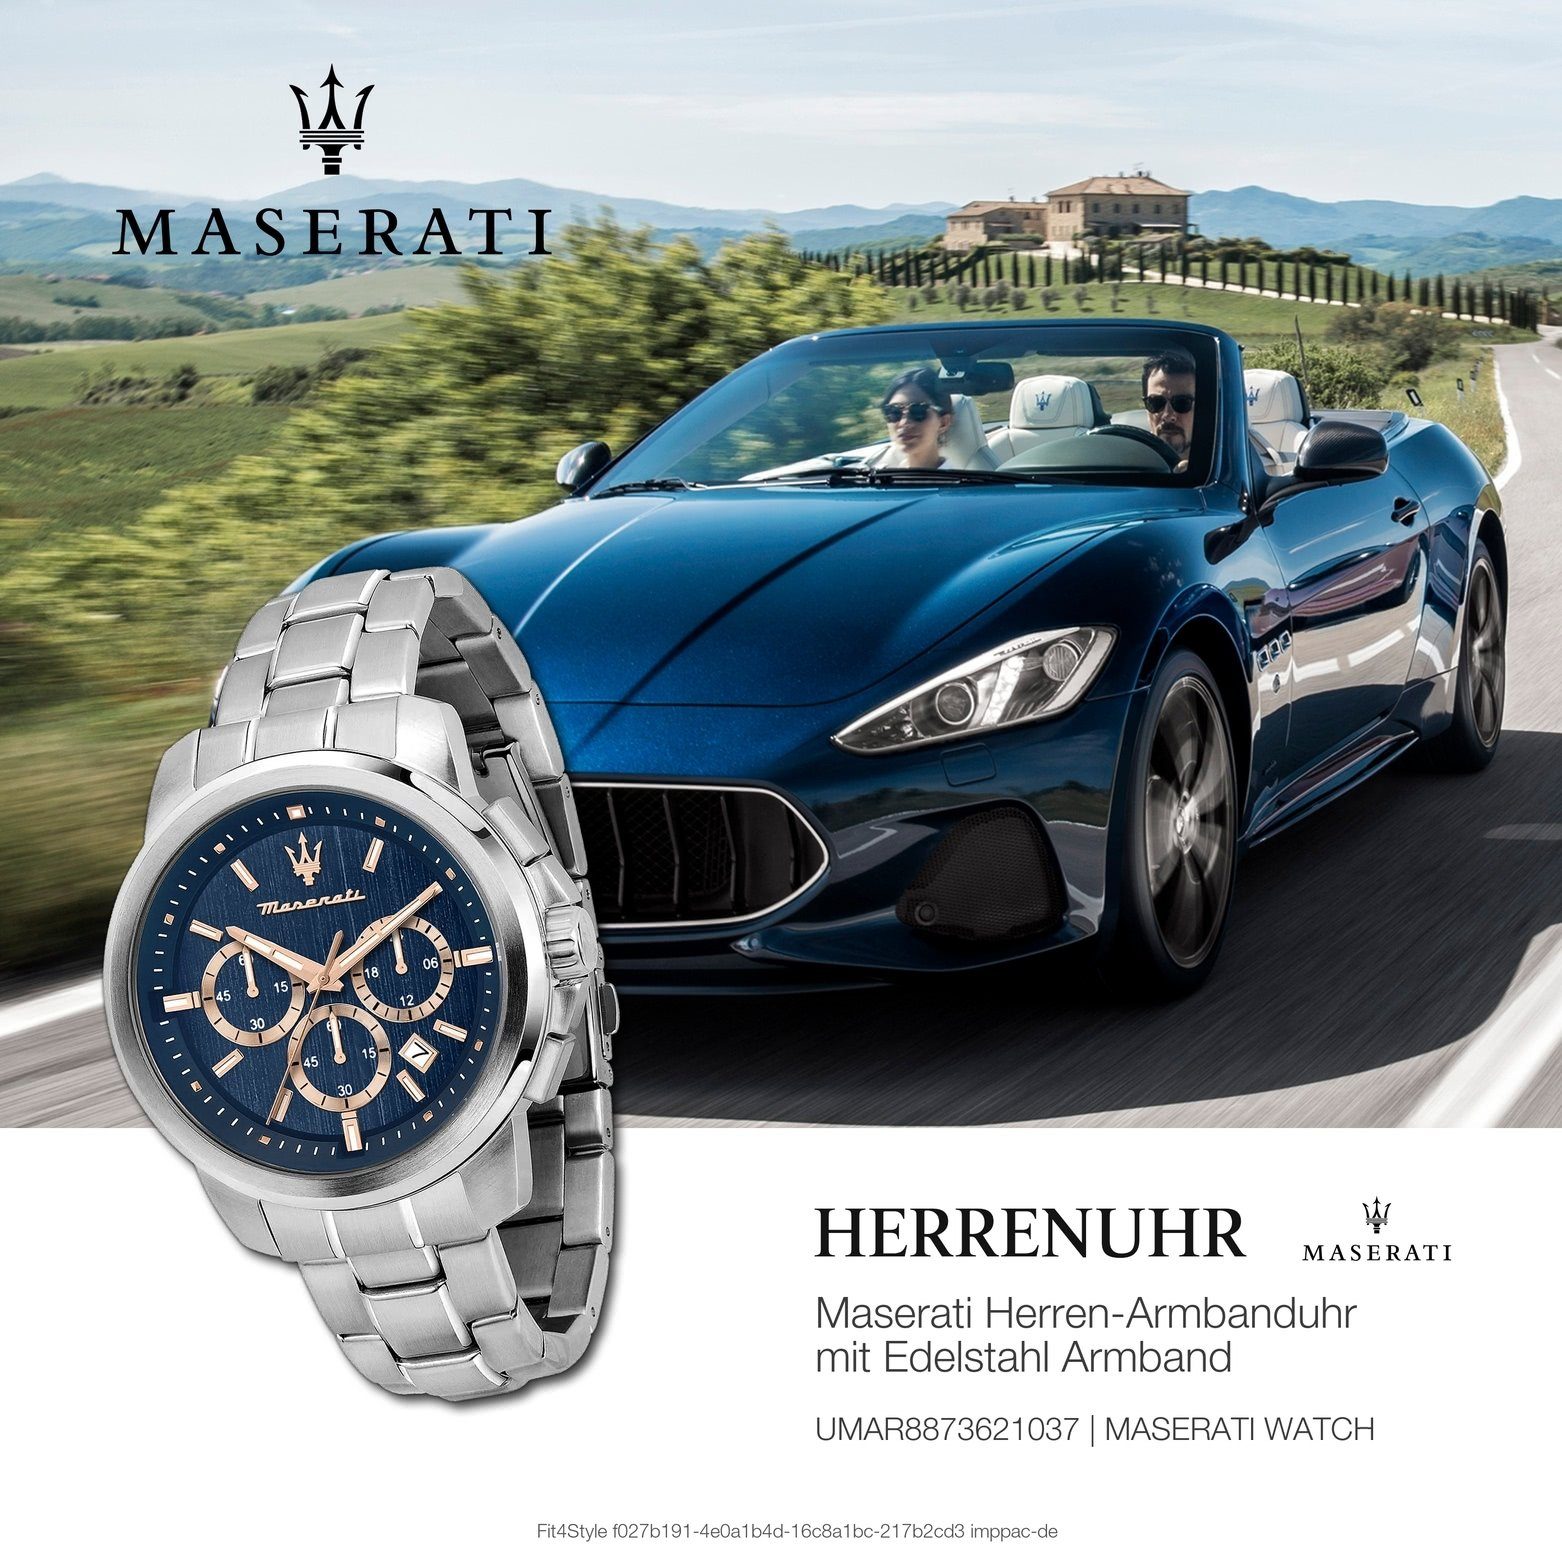 MASERATI Chronograph Maserati Chrono, Herrenuhr Herrenuhr groß Italy Successo silber blau, rund, roségold, 44mm) Made-In (ca. Edelstahlarmband